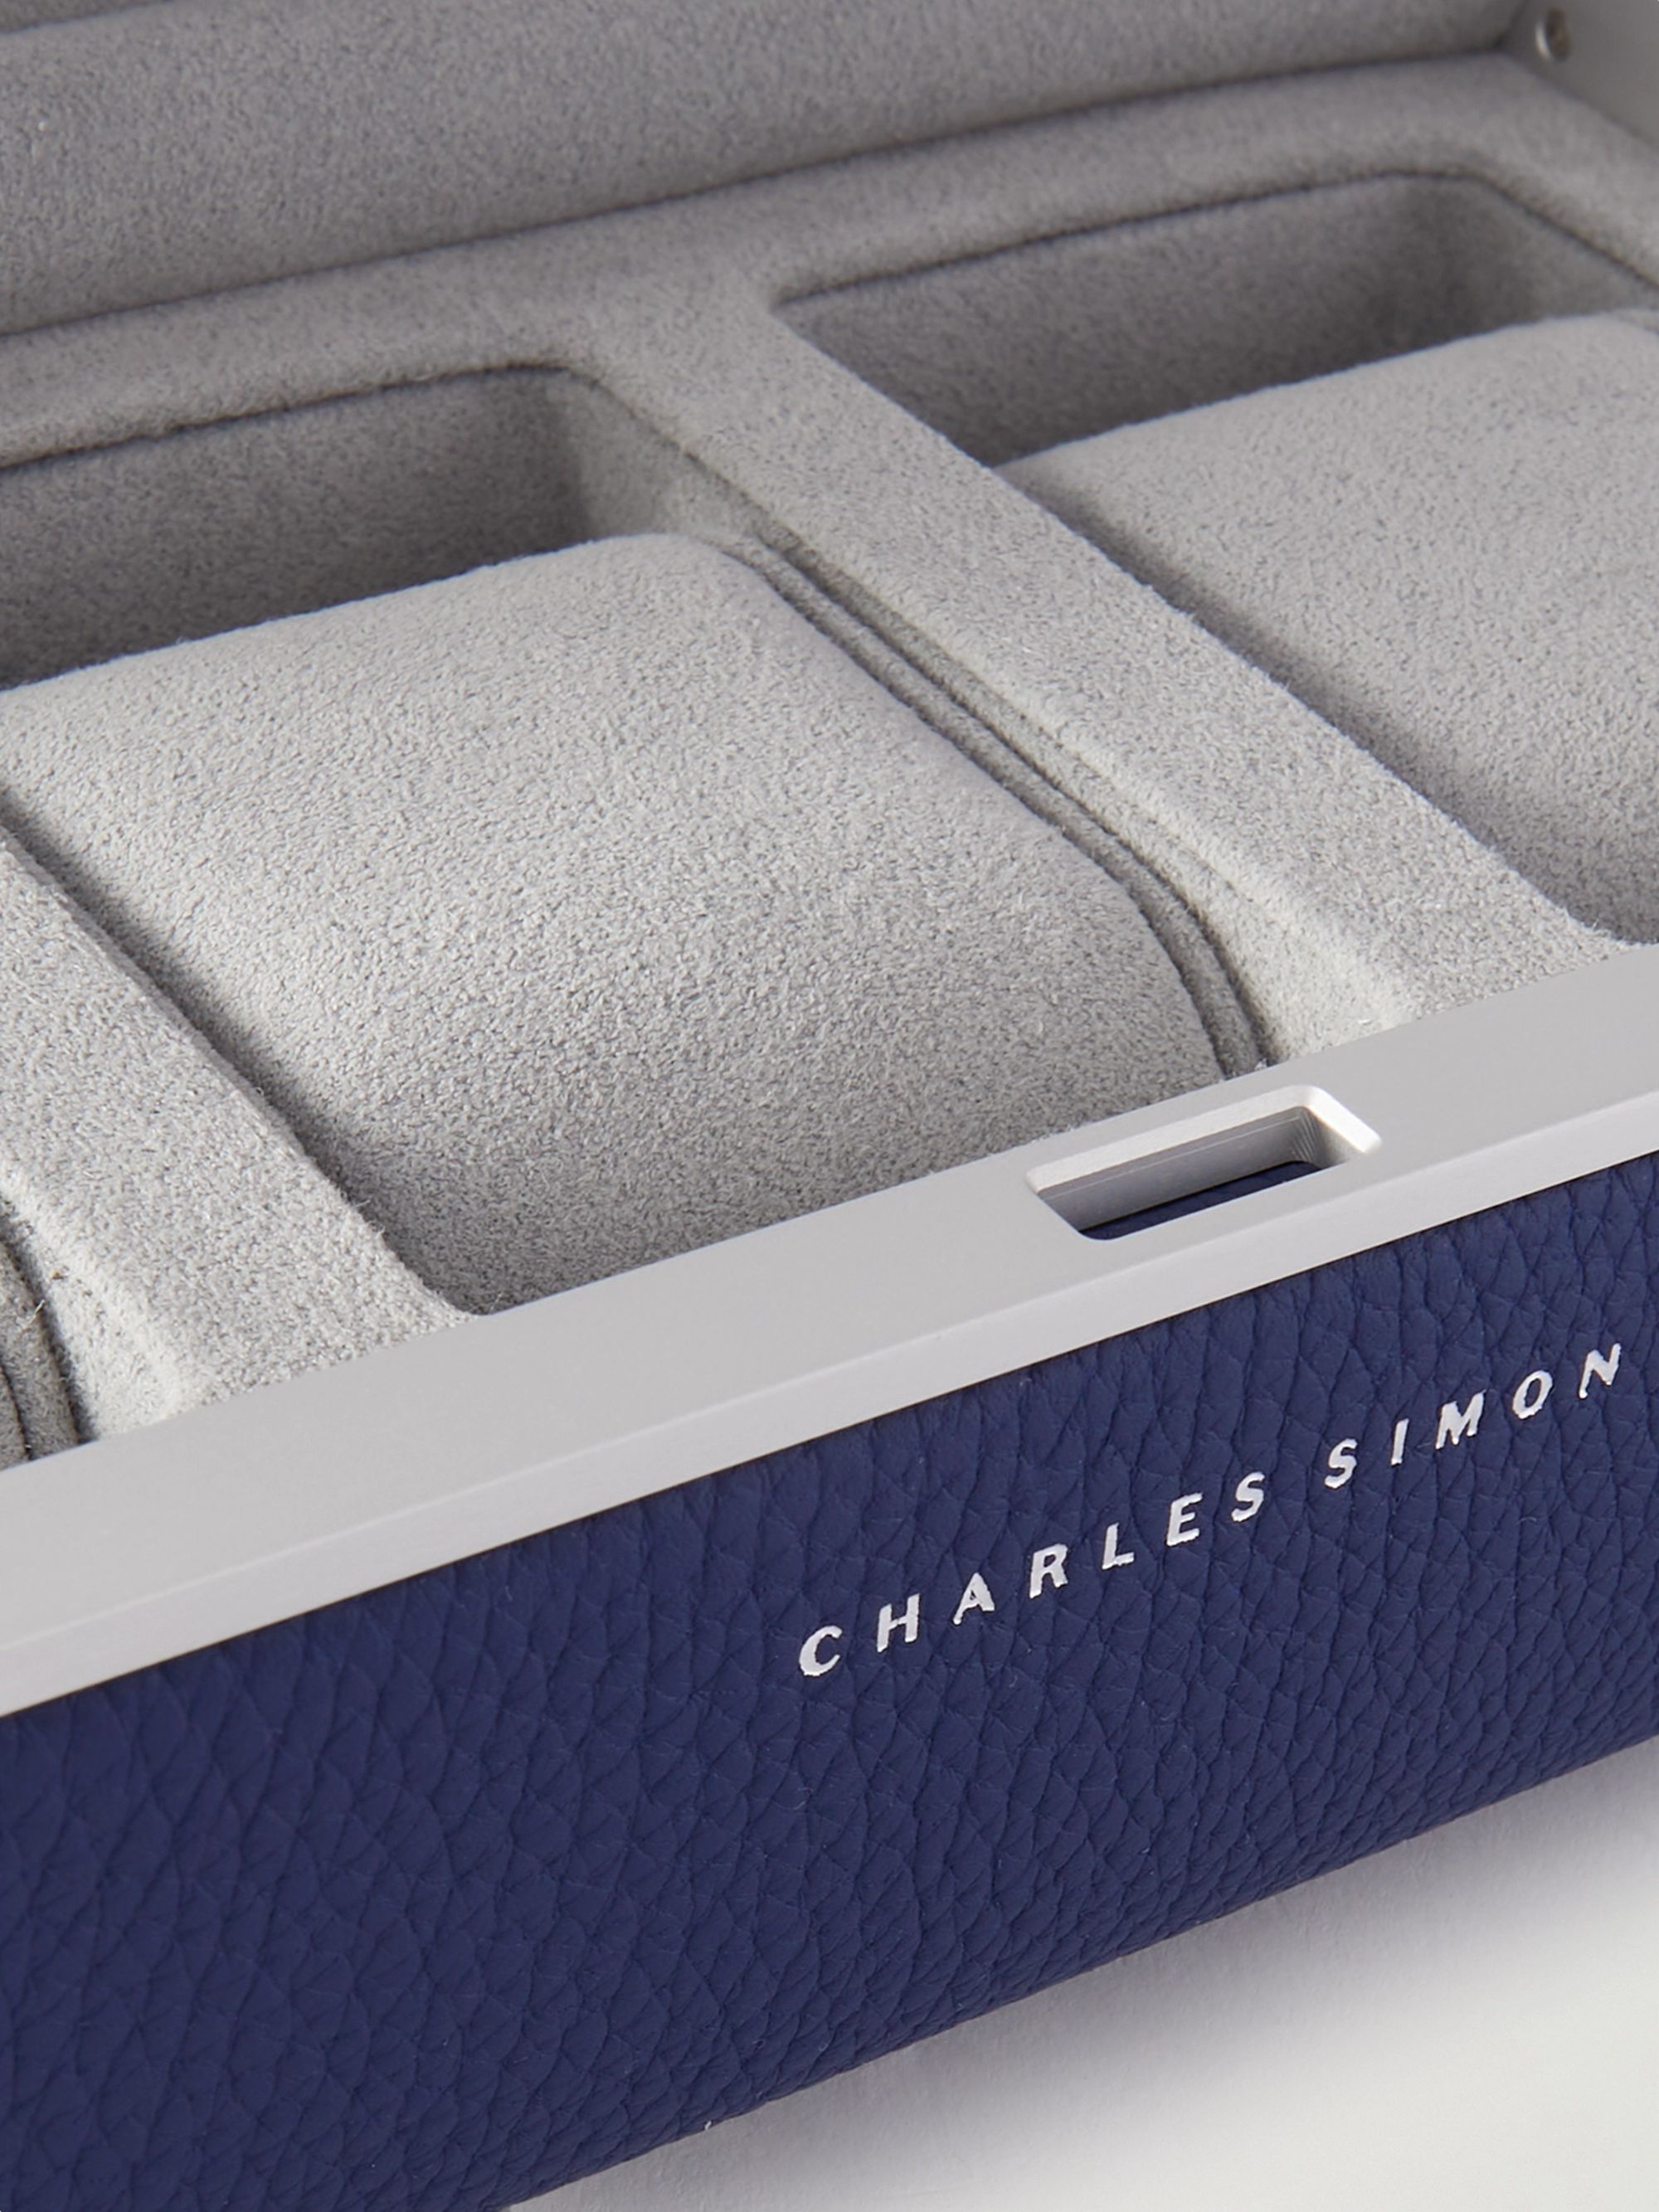 CHARLES SIMON Eaton Full-Grain Leather Three-Piece Travel Watch Case